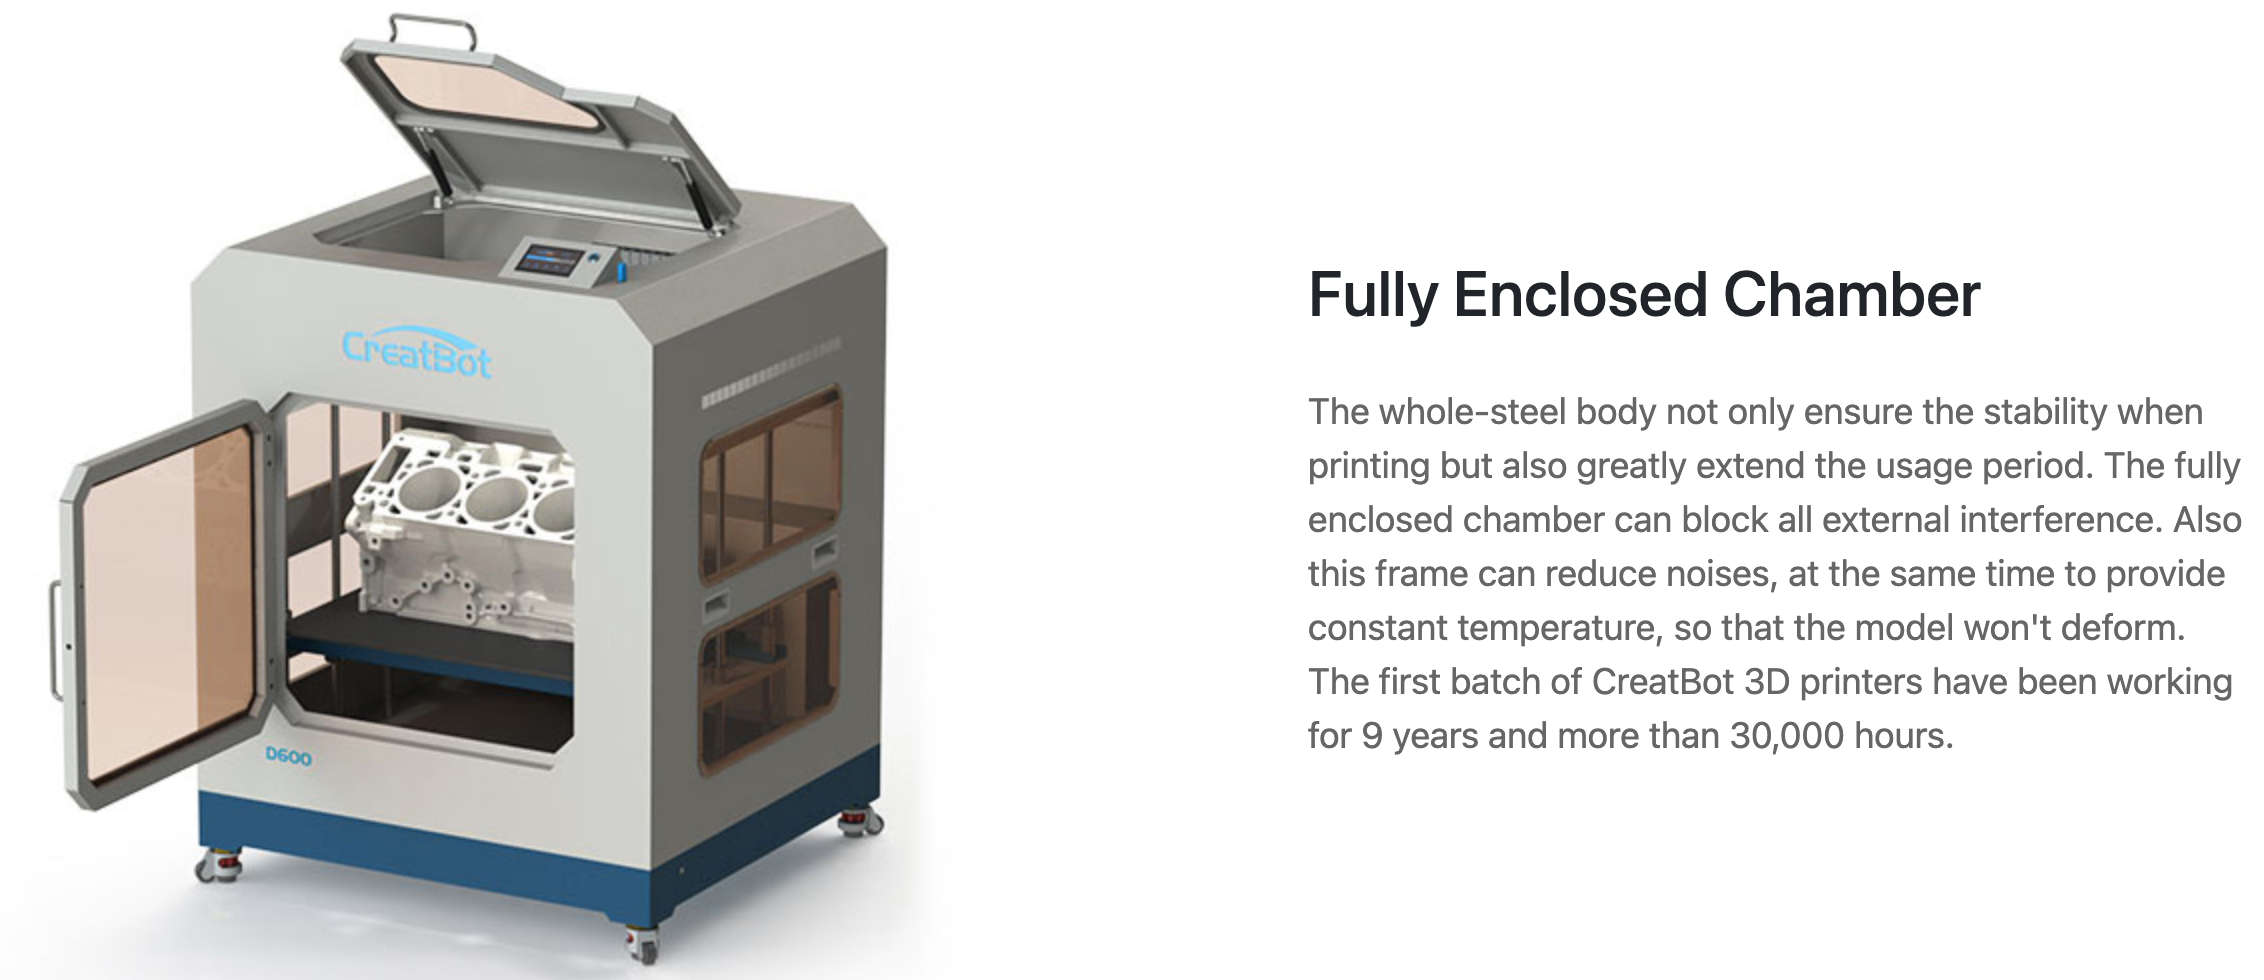 CreatBot-D600-Pro-3D-Printer-Fully-Enclosed-Chamber